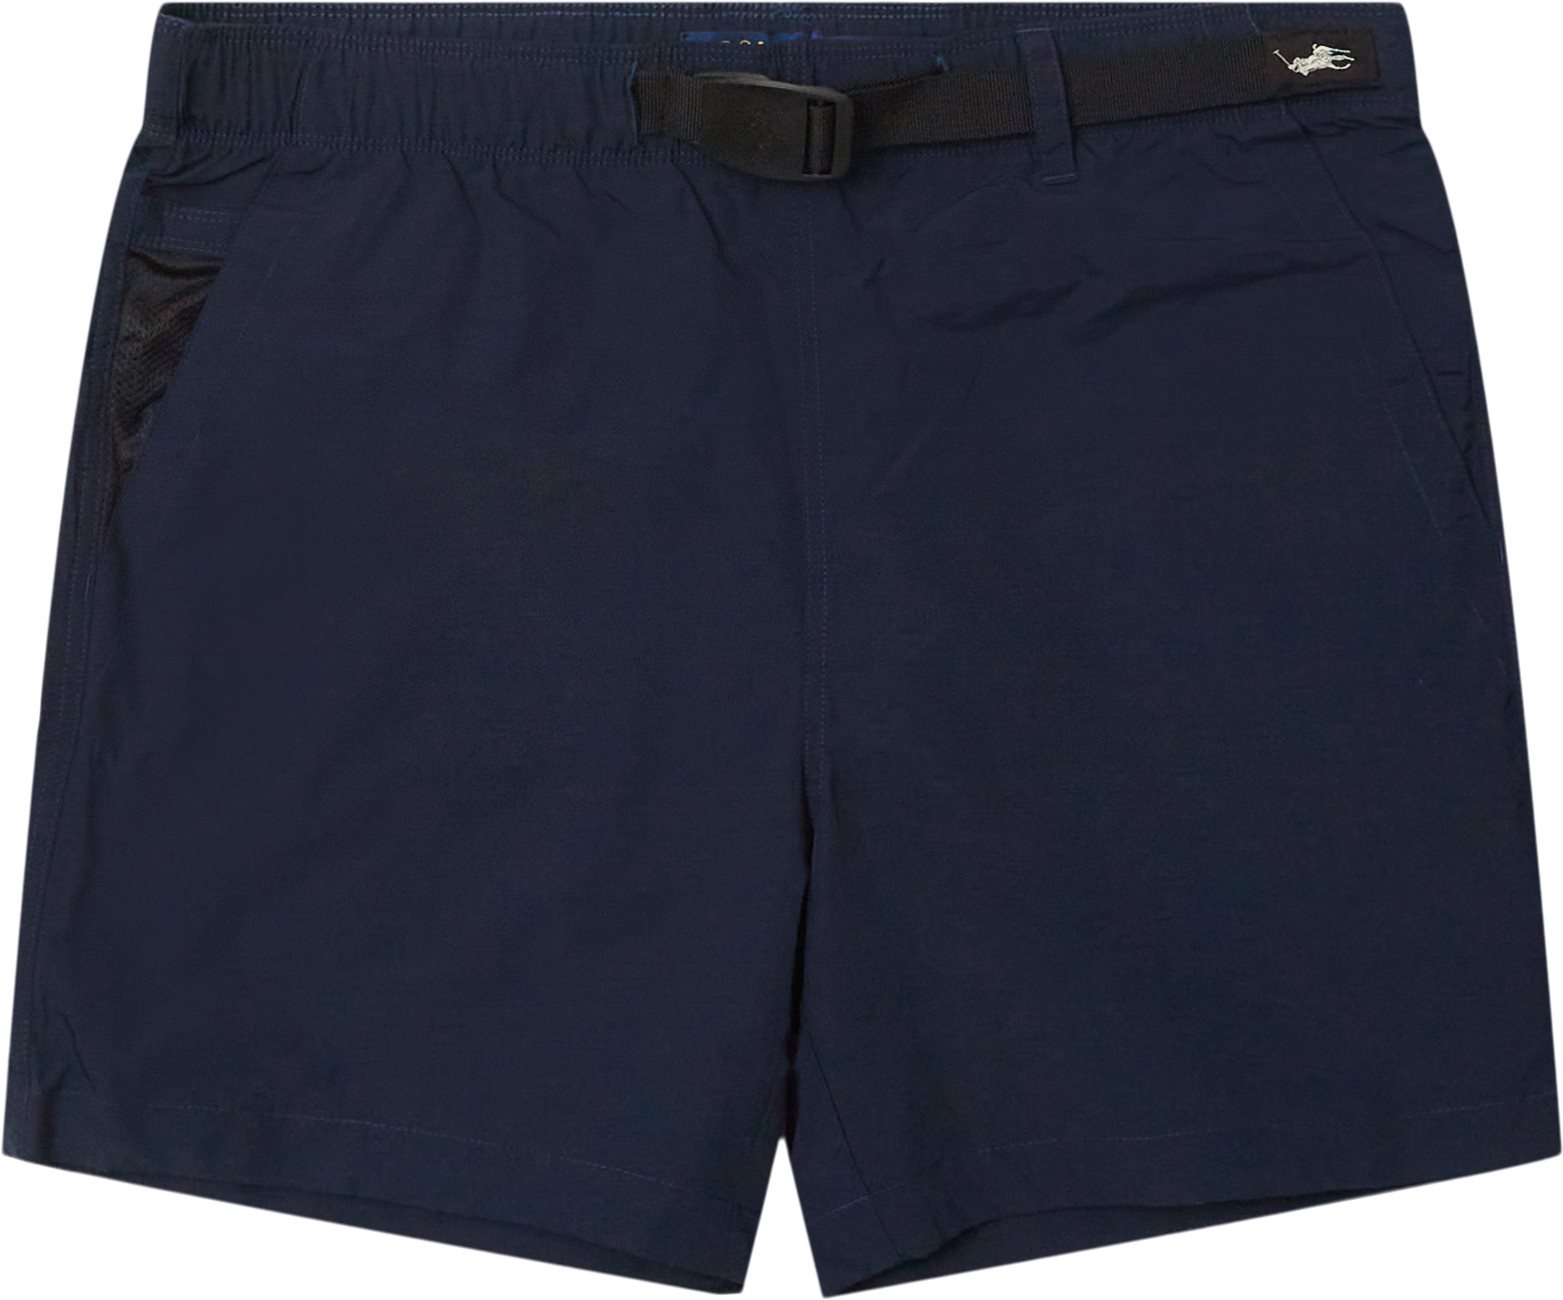 710843137 Comfort shorts - Shorts - Regular fit - Blue